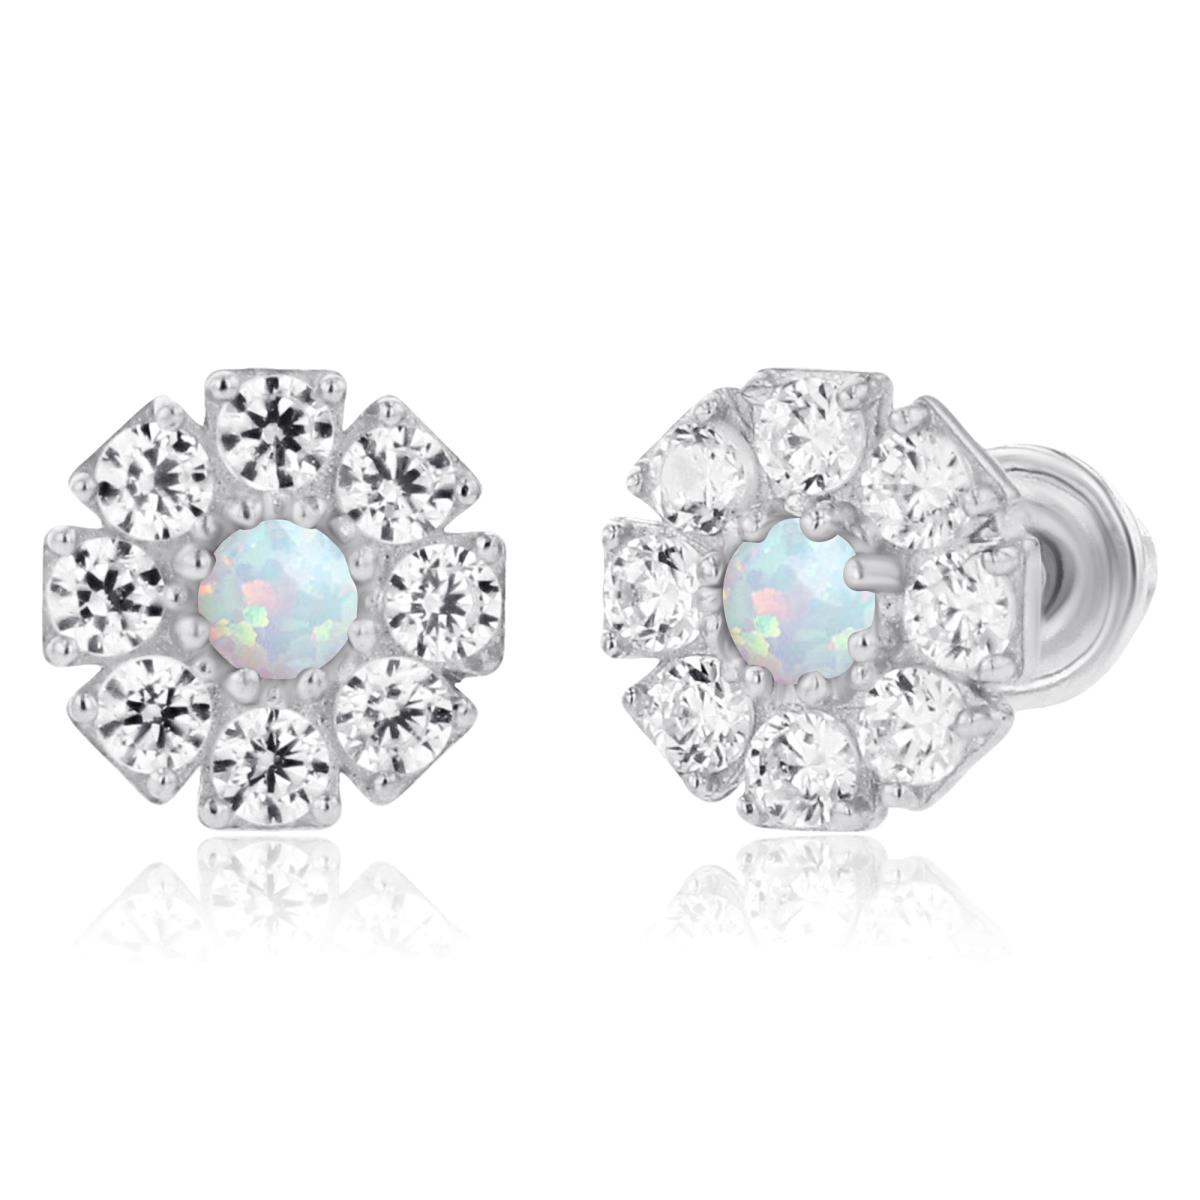 14K White Gold 2mm Round Created Opal & 1.5mm Created White Sapphire Flower Screwback Earrings